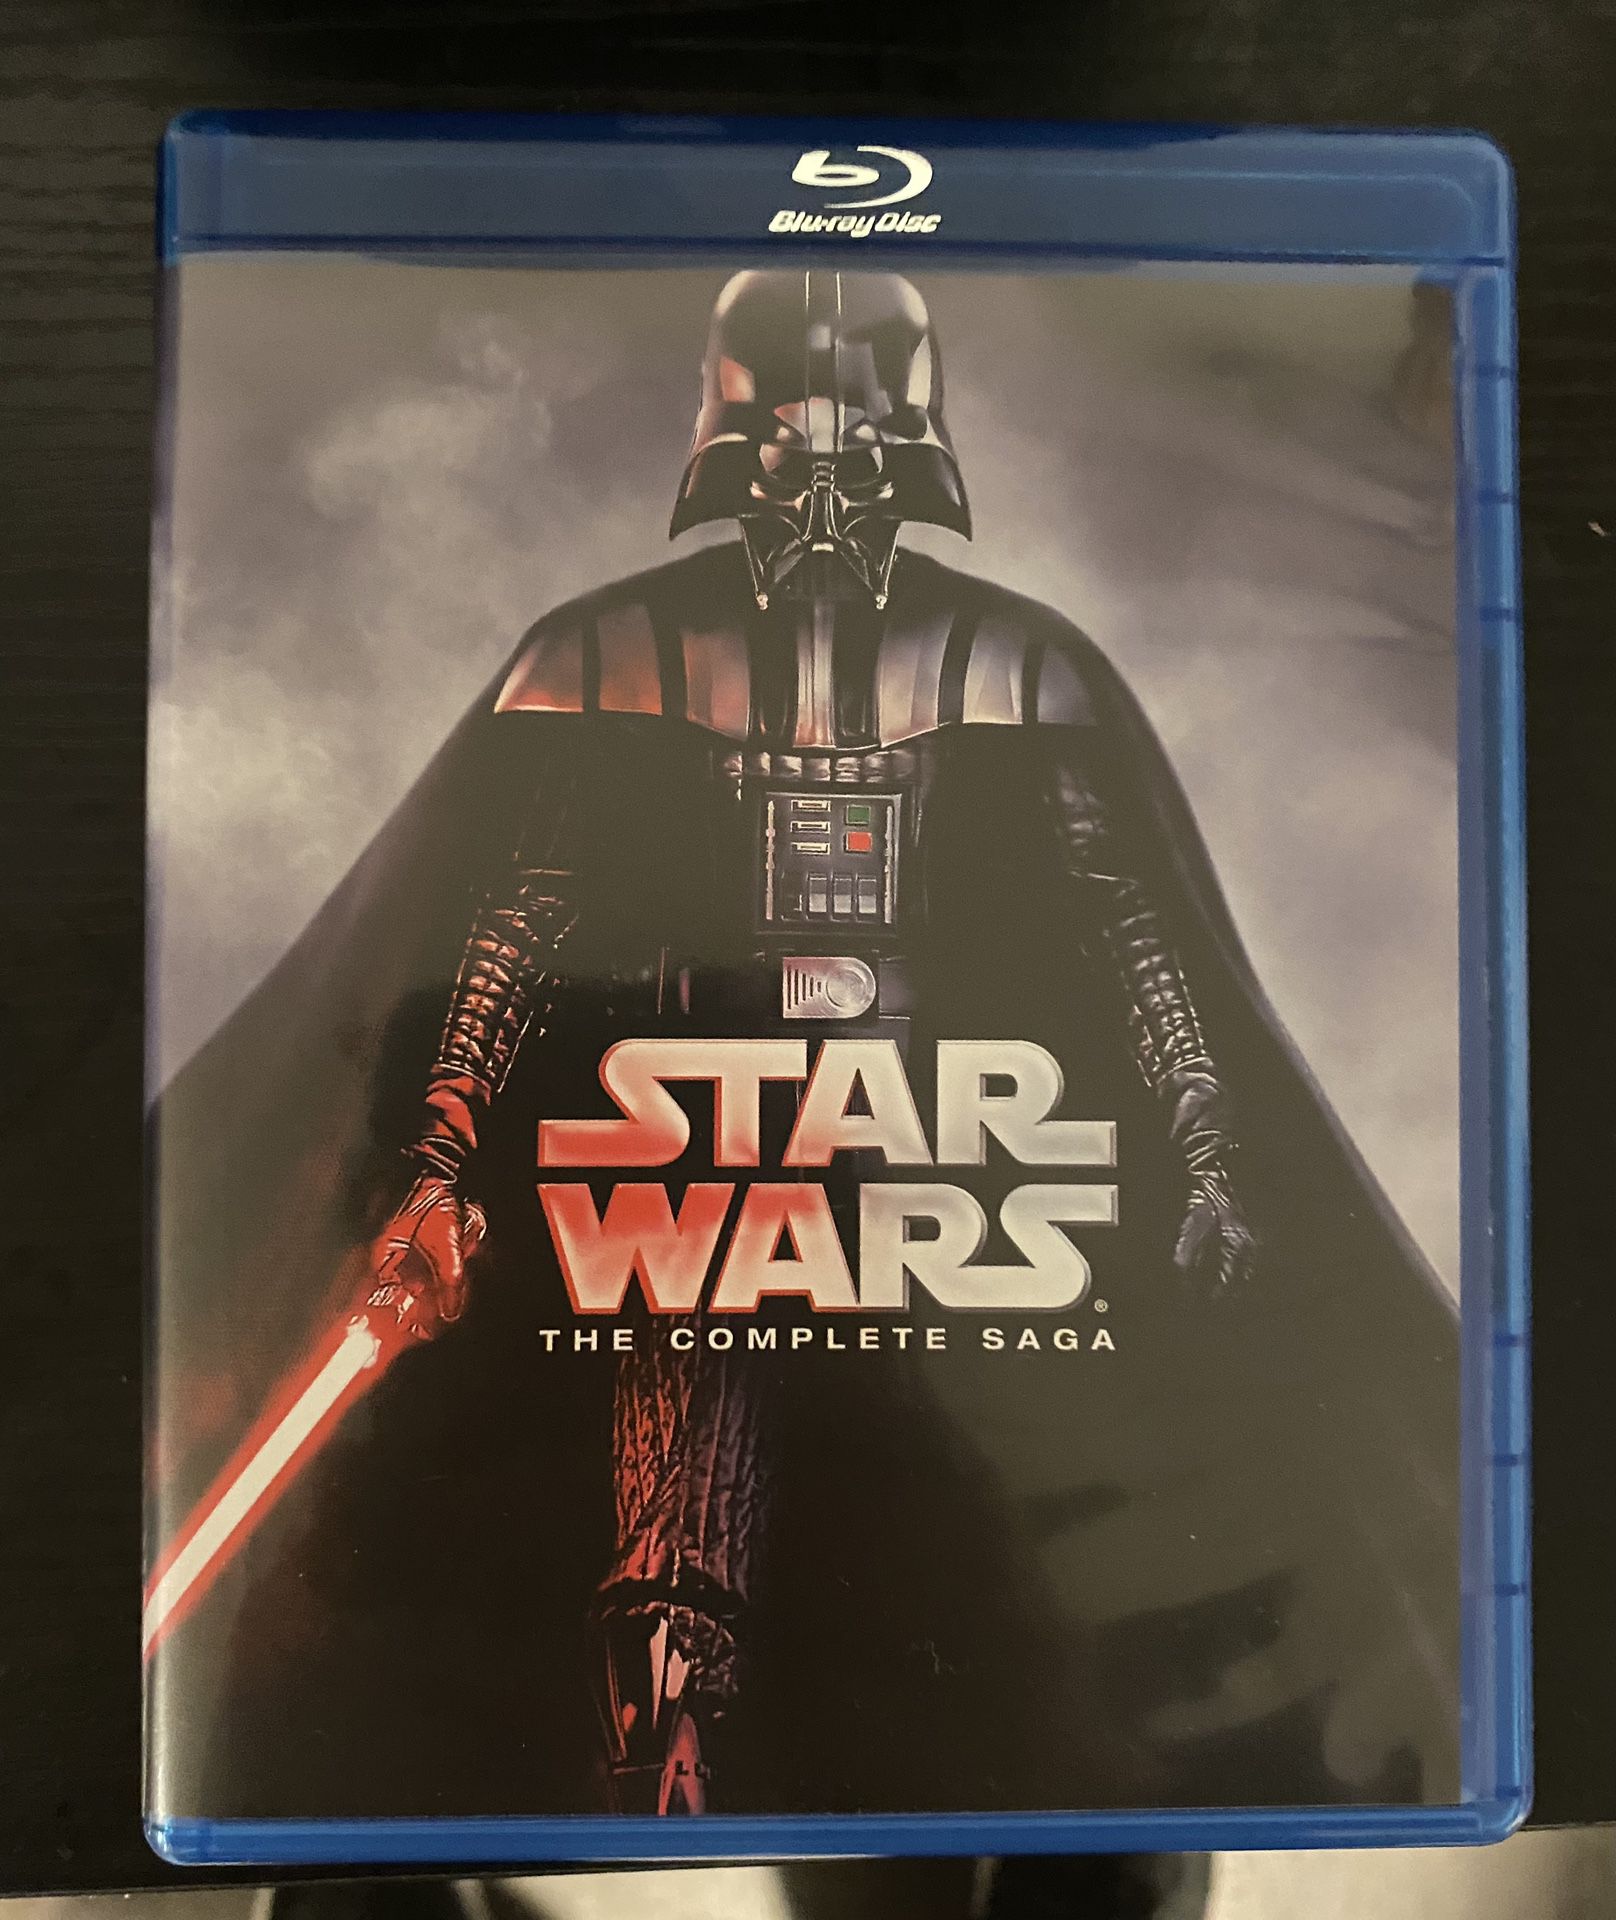 Star Wars “The Complete Saga” Blue Ray